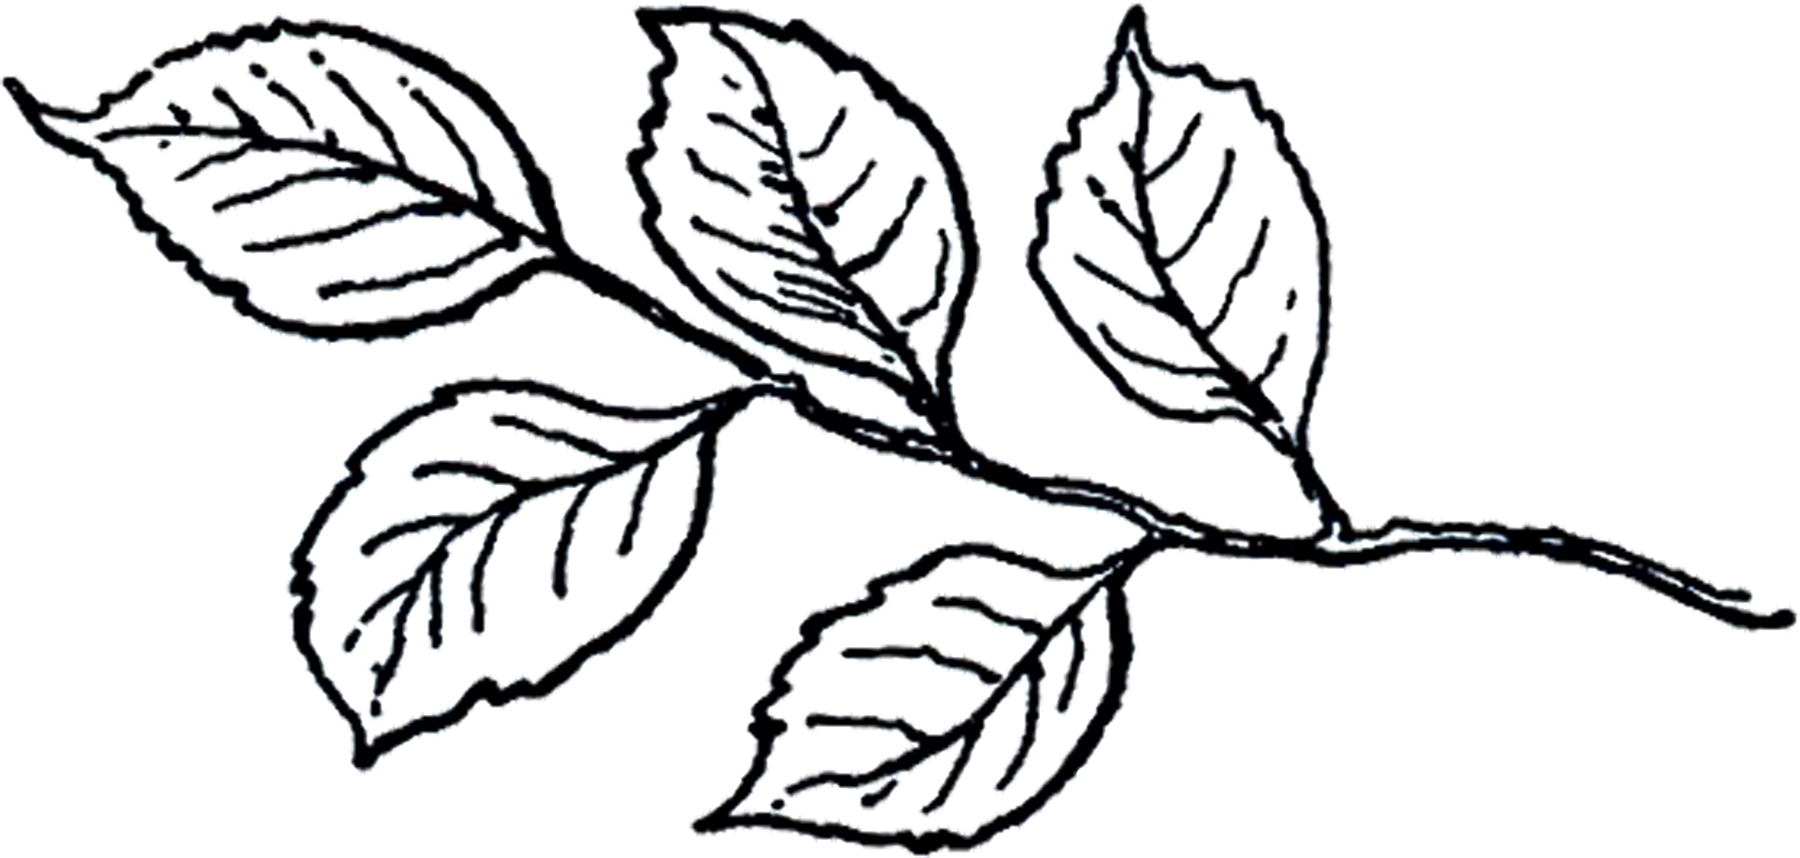 leafs line